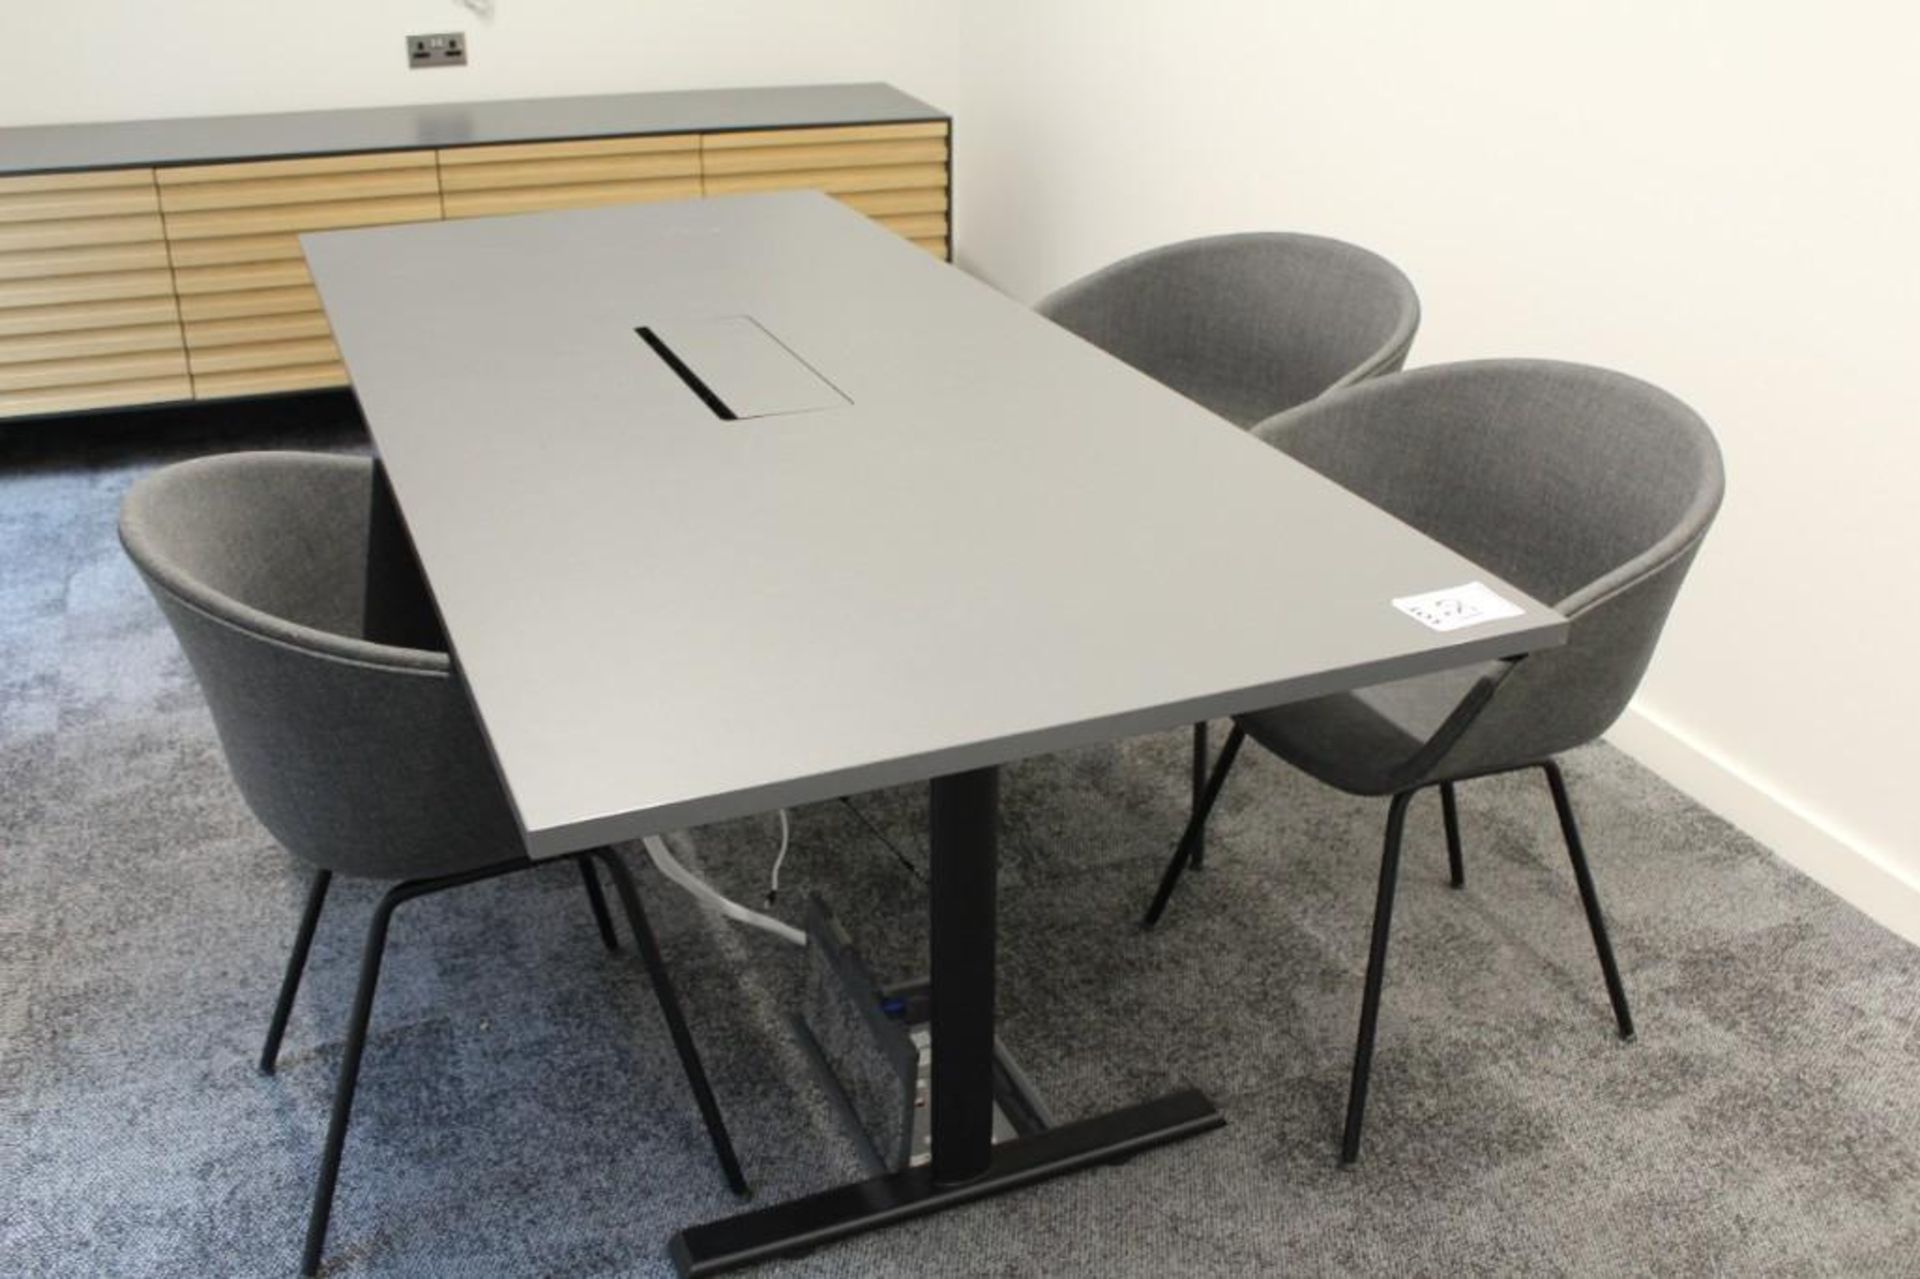 2x Grey Melamine table 2m x 0.9m